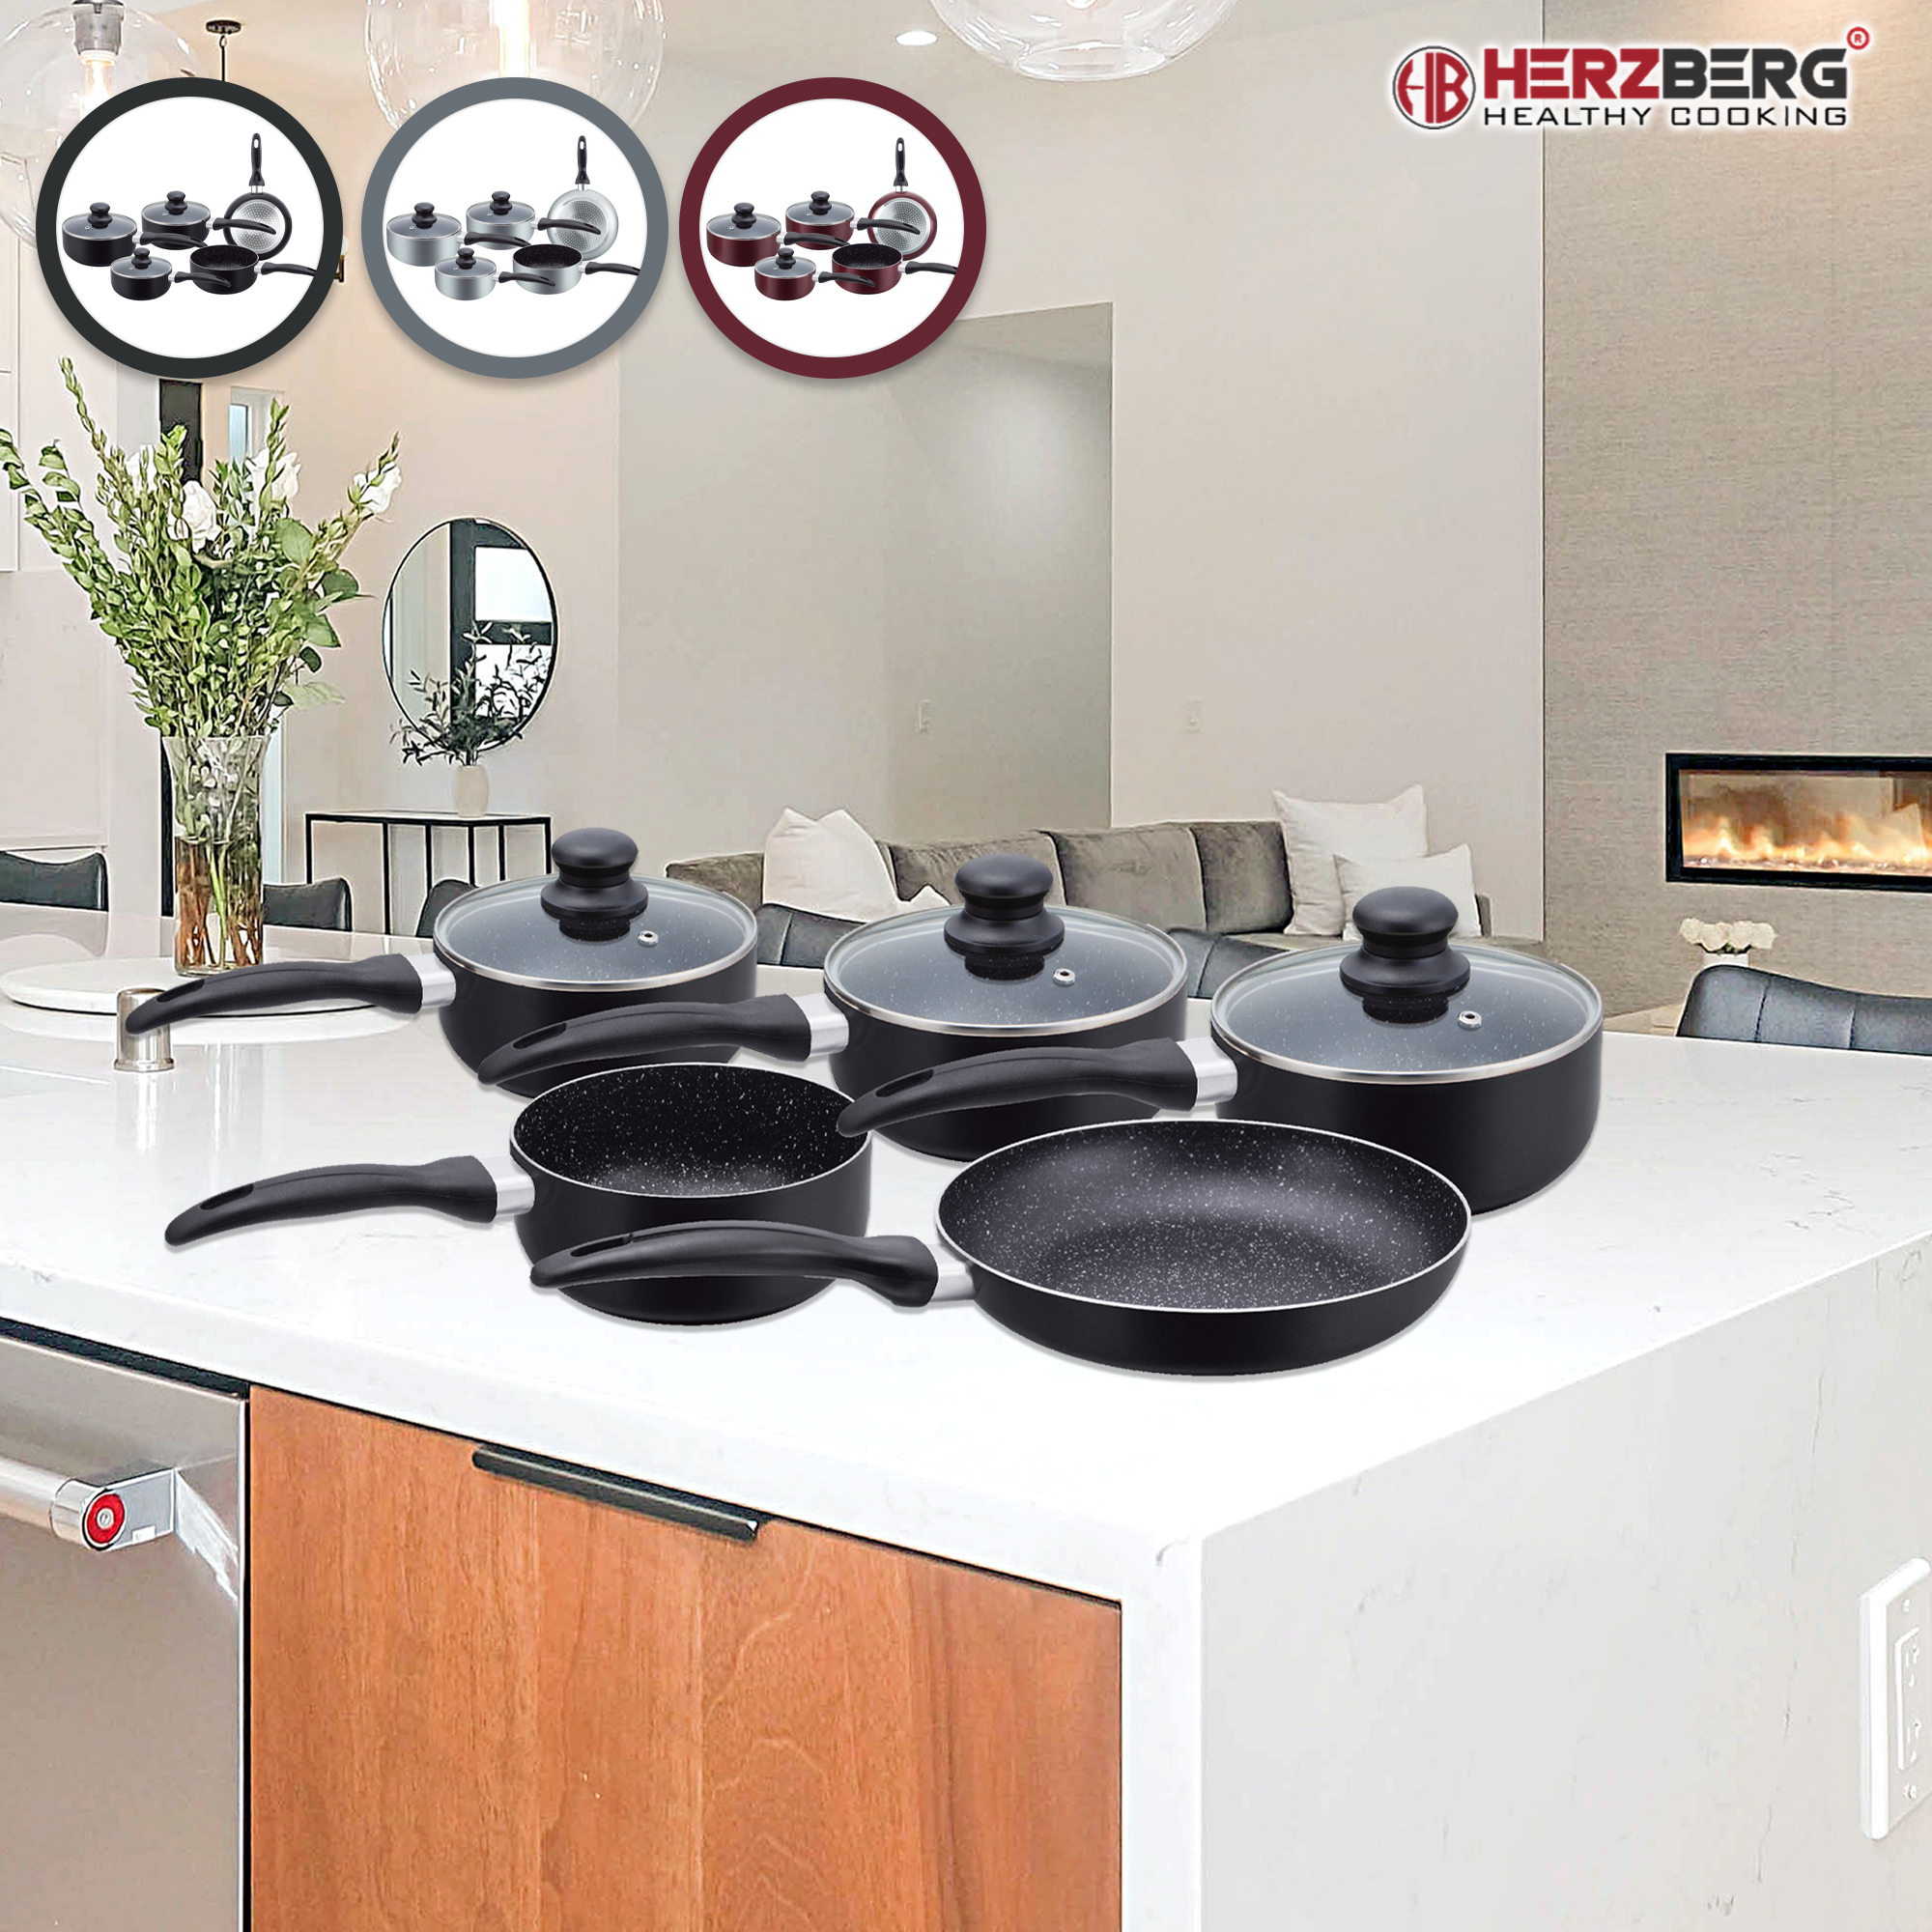 Herzberg-HG-5003SL-Batterie-de-cuisine-en-marbre-8-piece-7